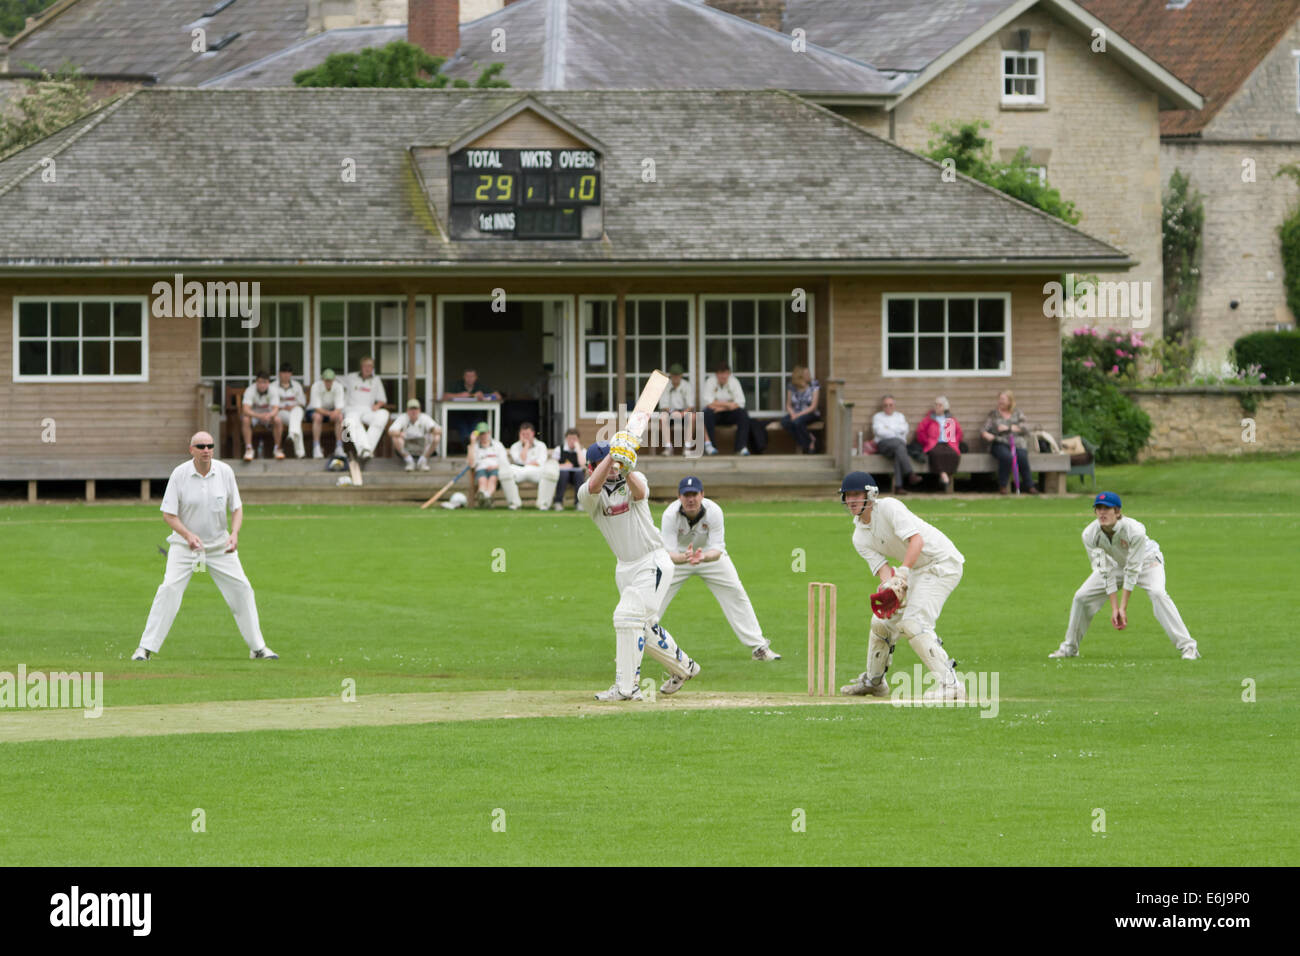 Cricket Village à Hovingham dans Yorkshire du nord en Angleterre Banque D'Images